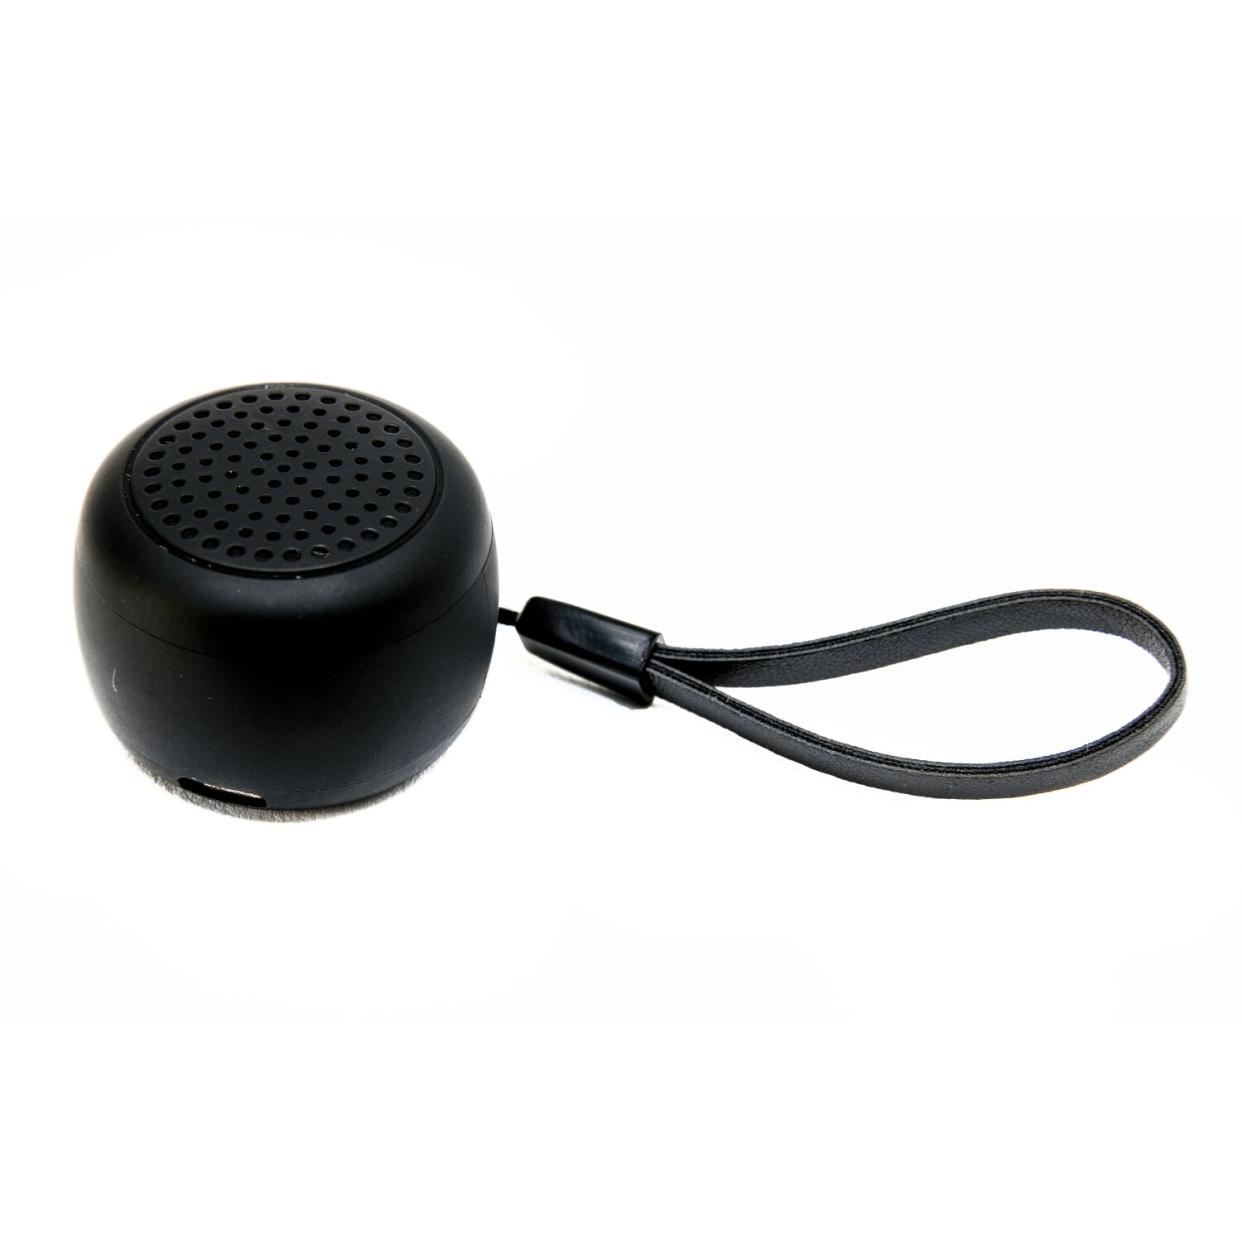 Momoho Wireless Bluetooth Speaker